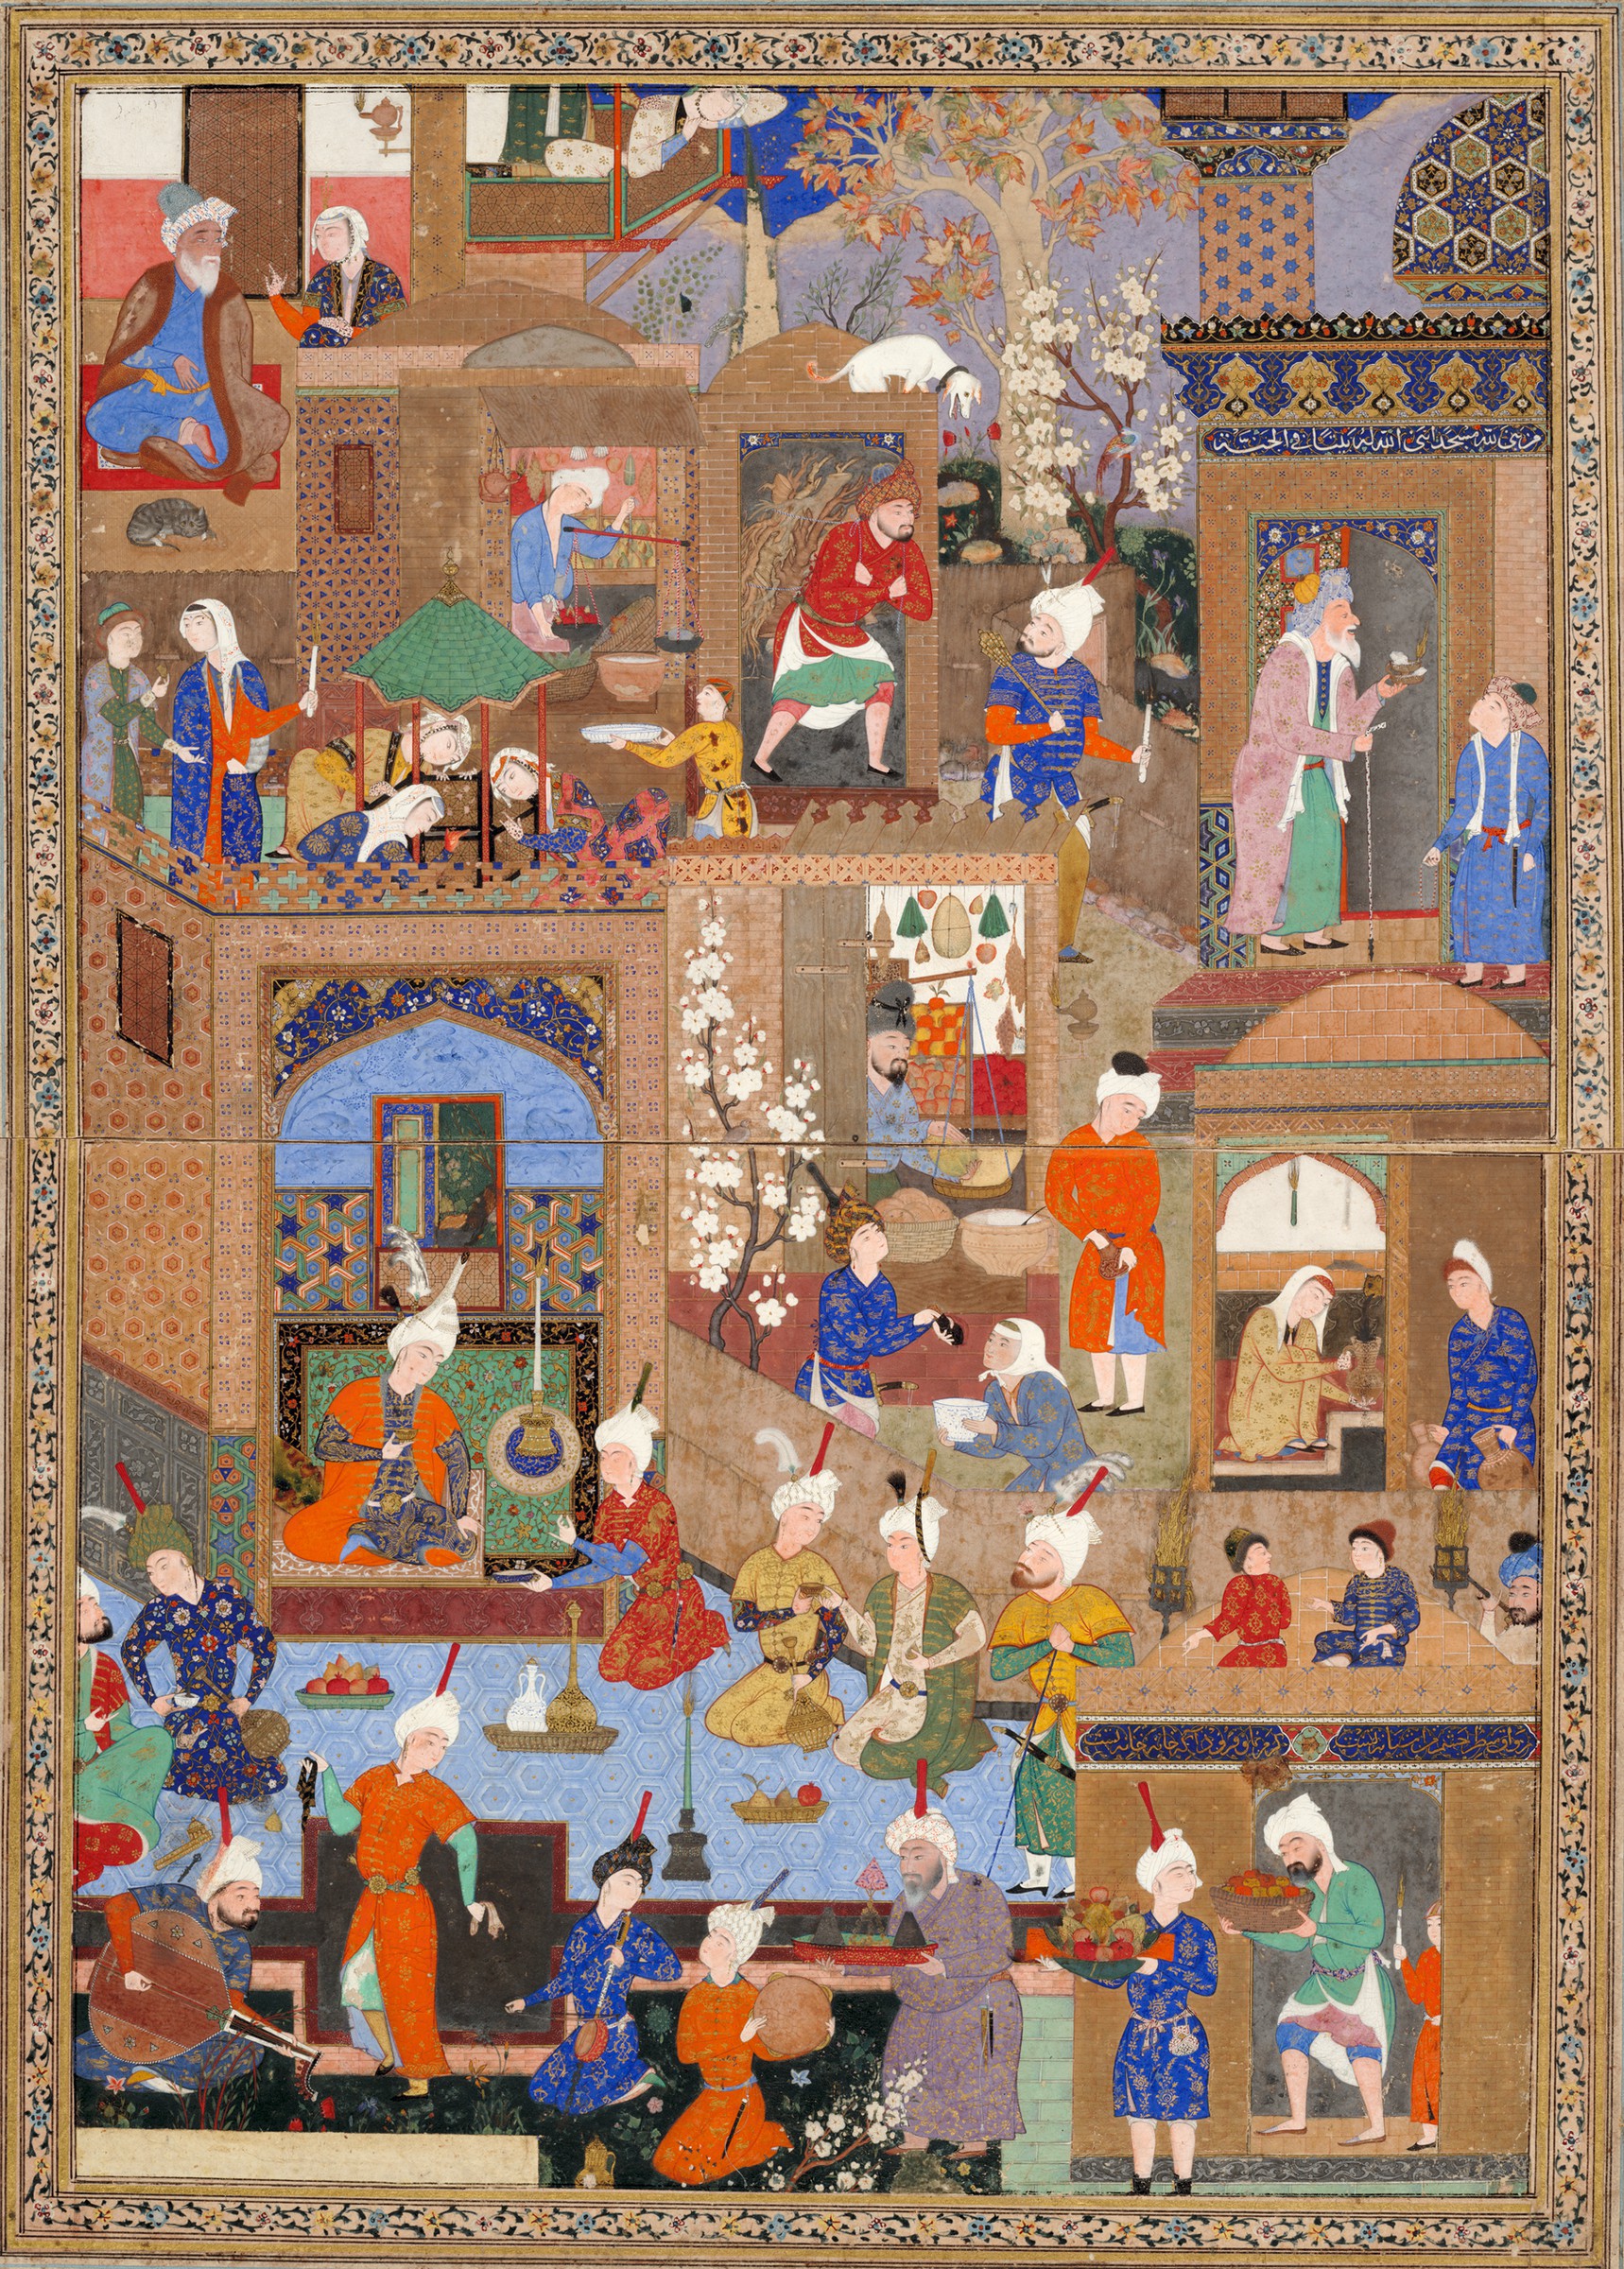 Persian Miniature Painting - World History Encyclopedia